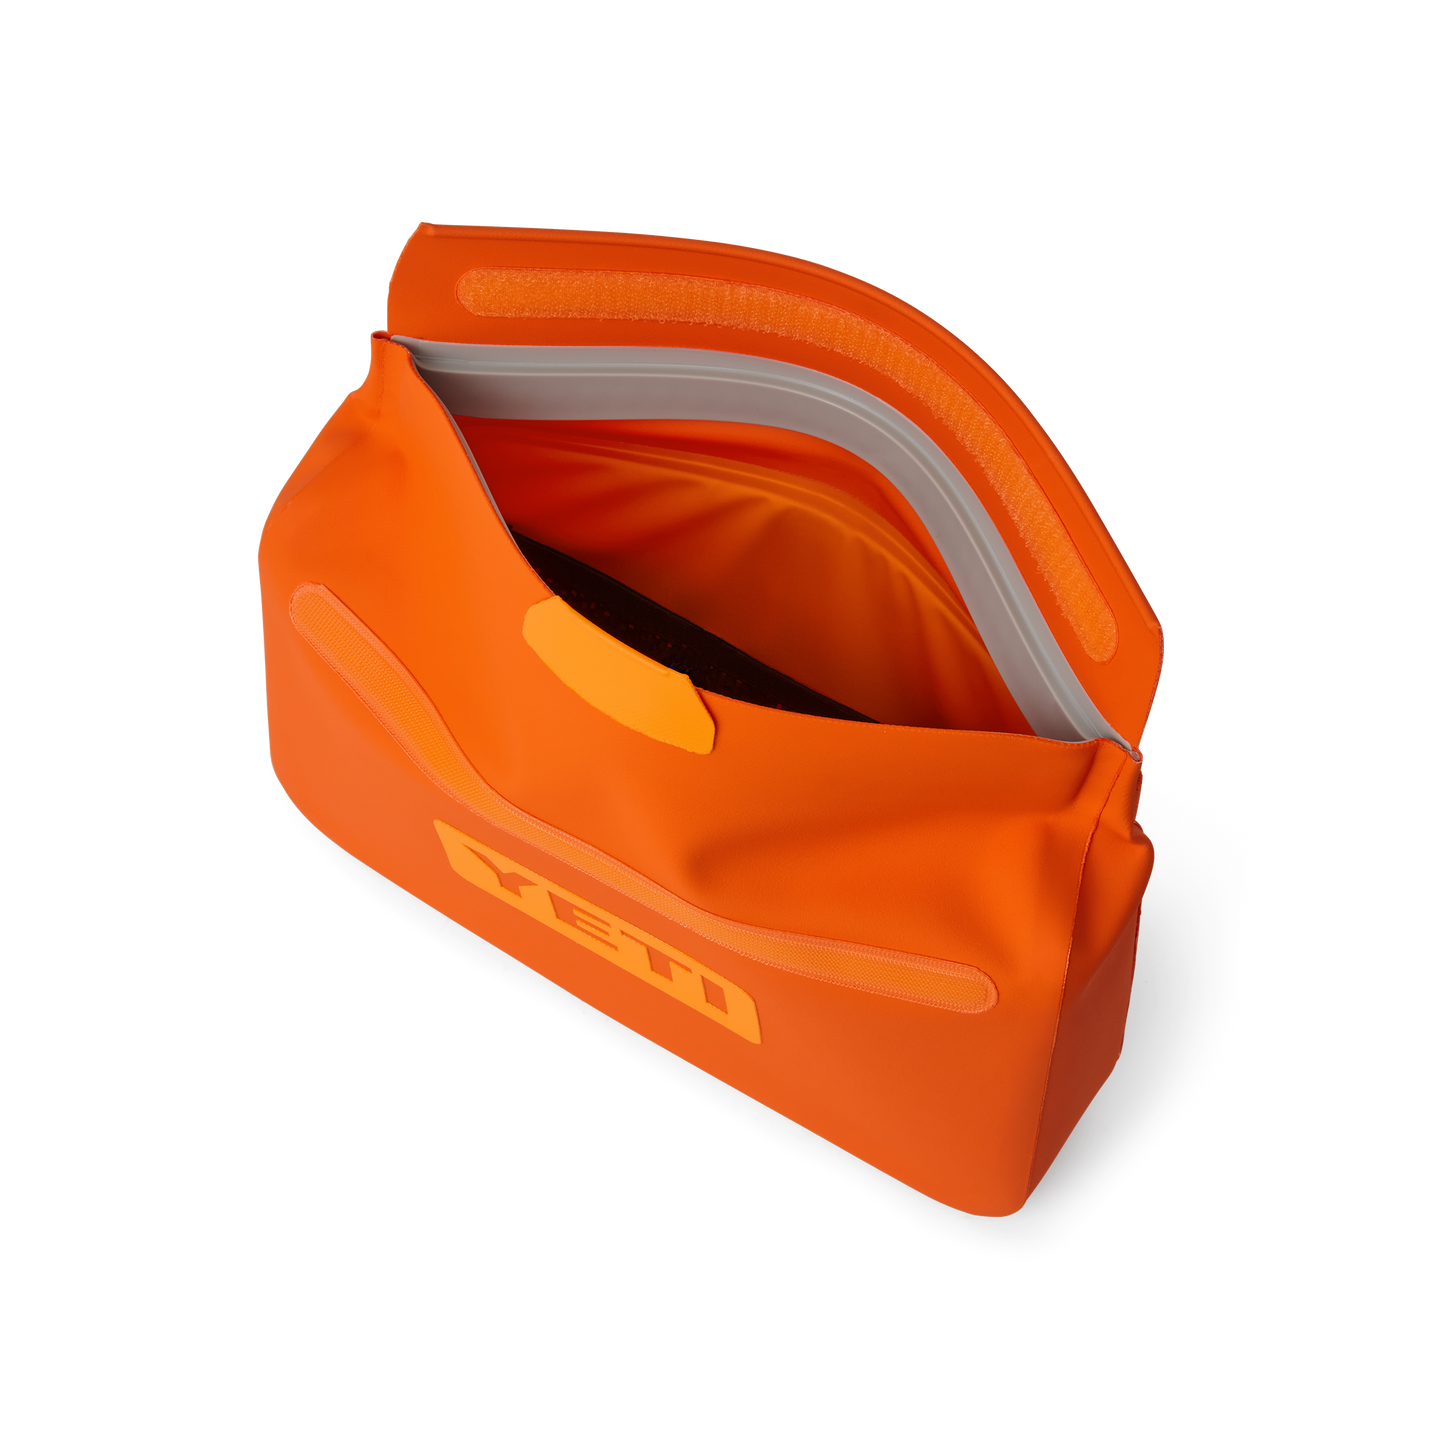 YETI Sidekick Dry® 3L Gear Case King Crab Orange